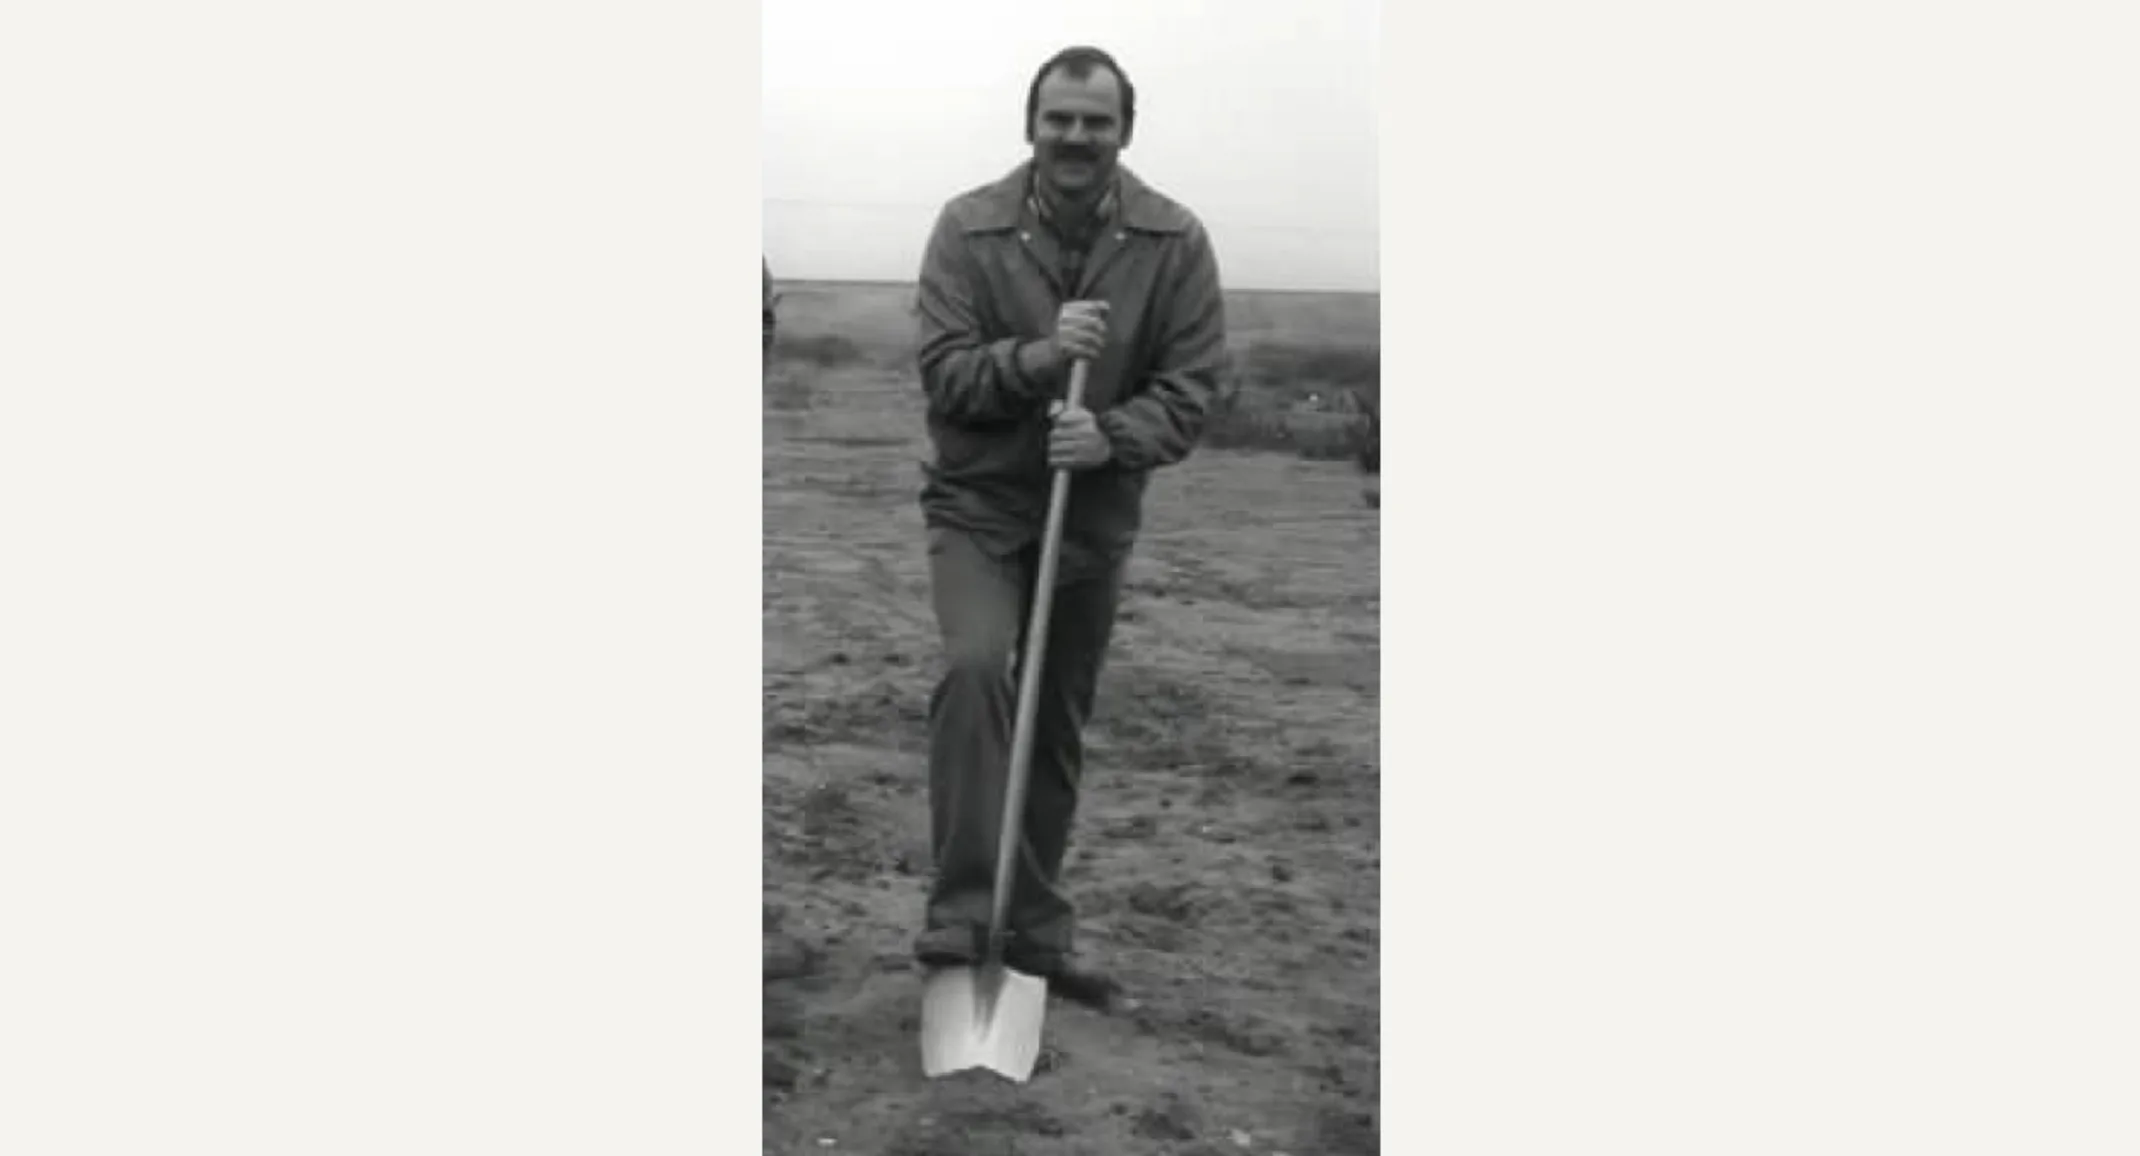 Dr. Duane Schnittker breaking ground with a shovel